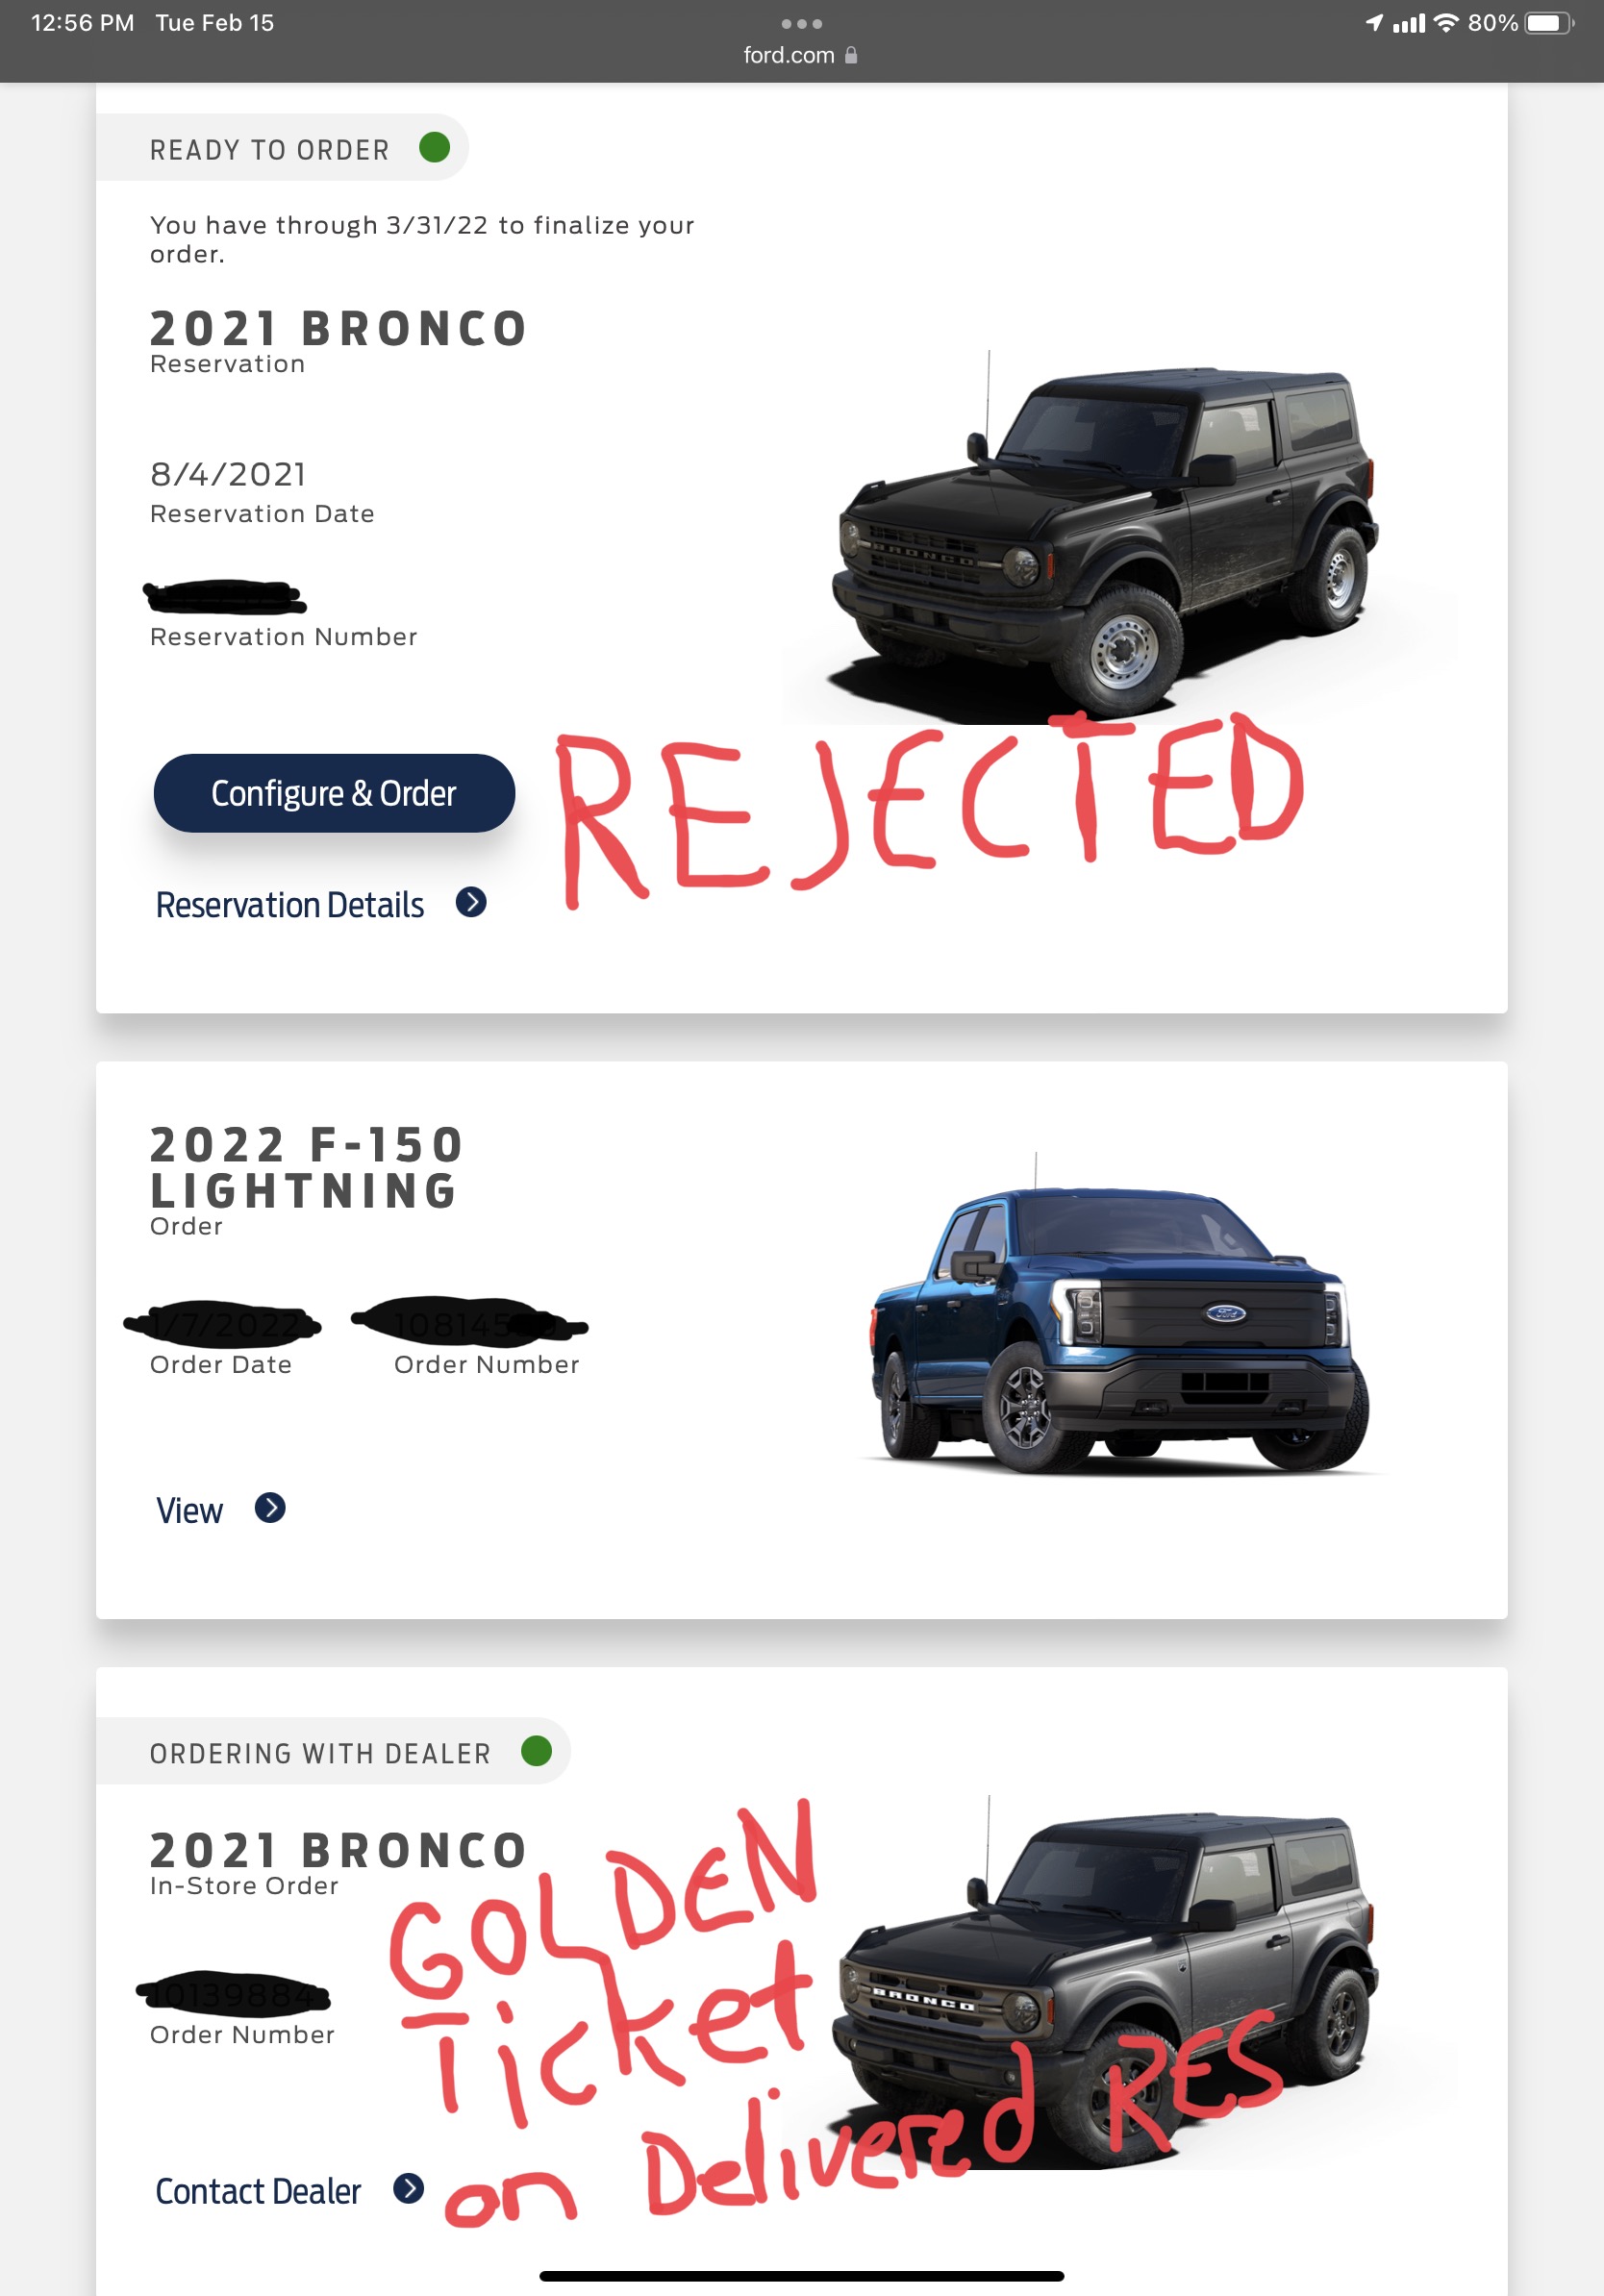 Ford Bronco Golden ticket on delivered reservation number? C6A1EE57-DDD4-4504-BE55-FA3A998FC6E7